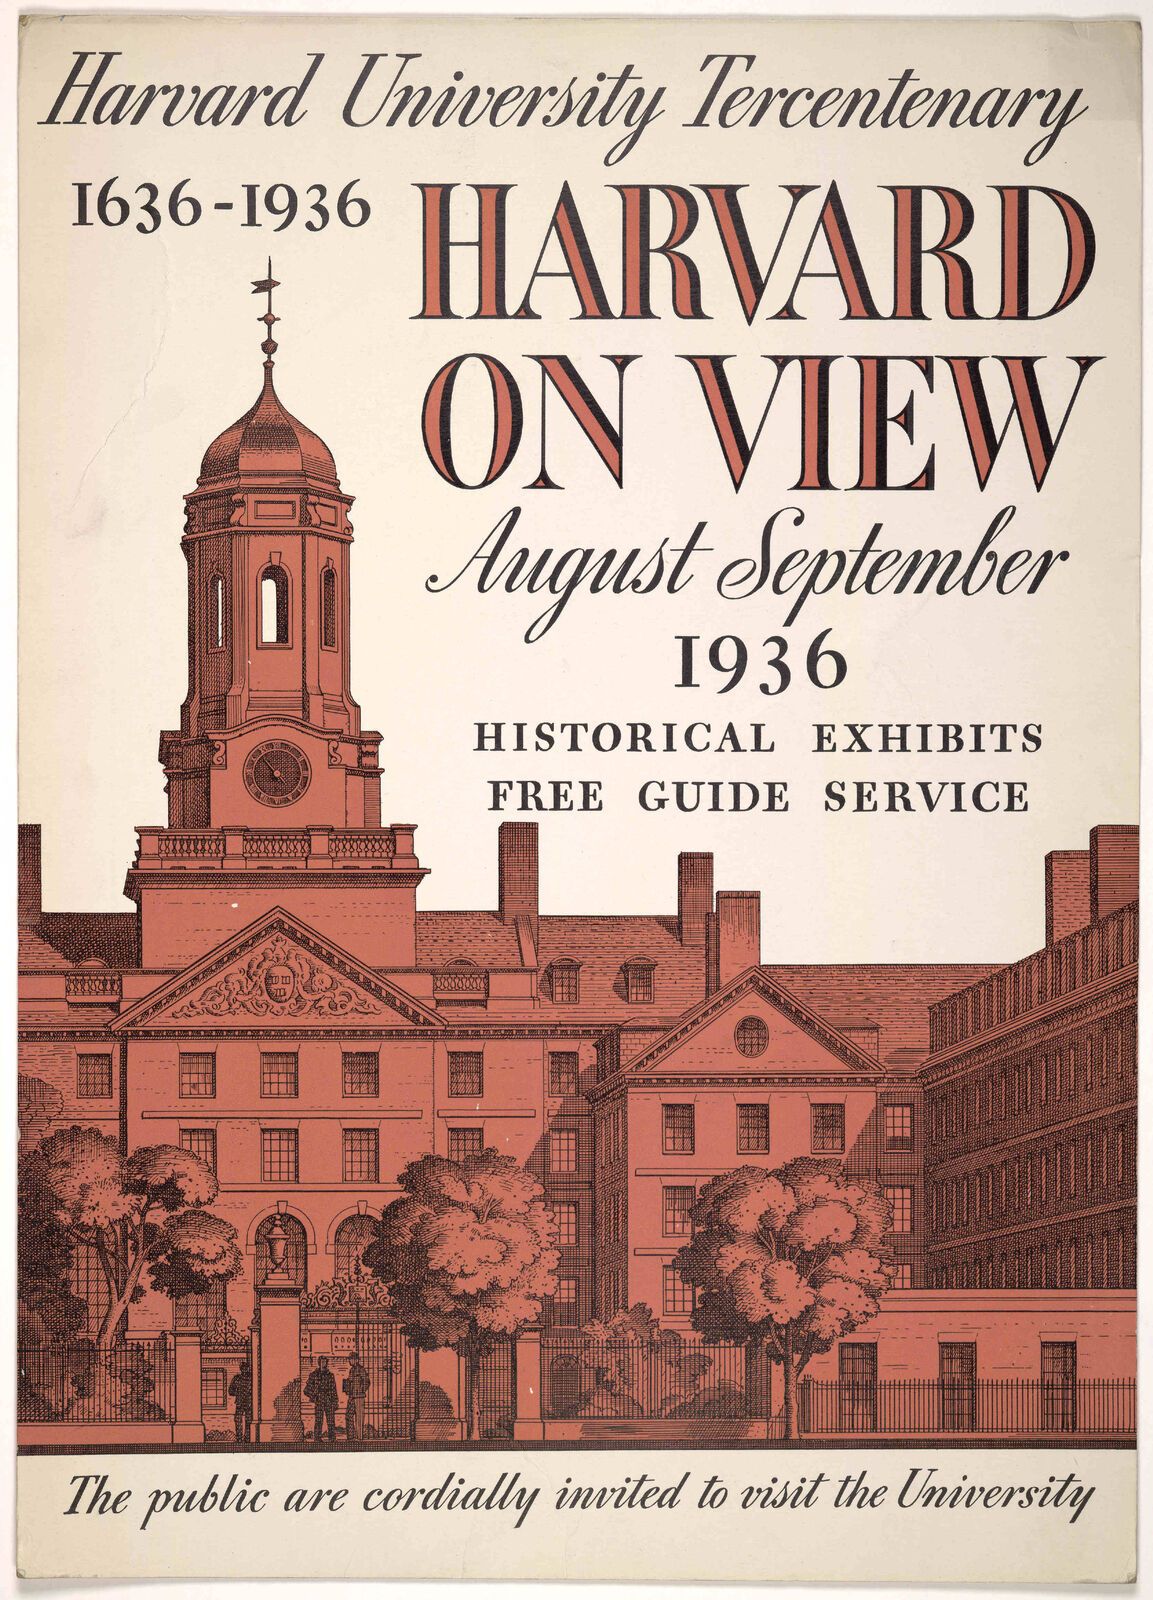 Harvard University Tercentenary Harvard on View August-September 1936. Historical Exhibits Free Guide Service. - Harvard